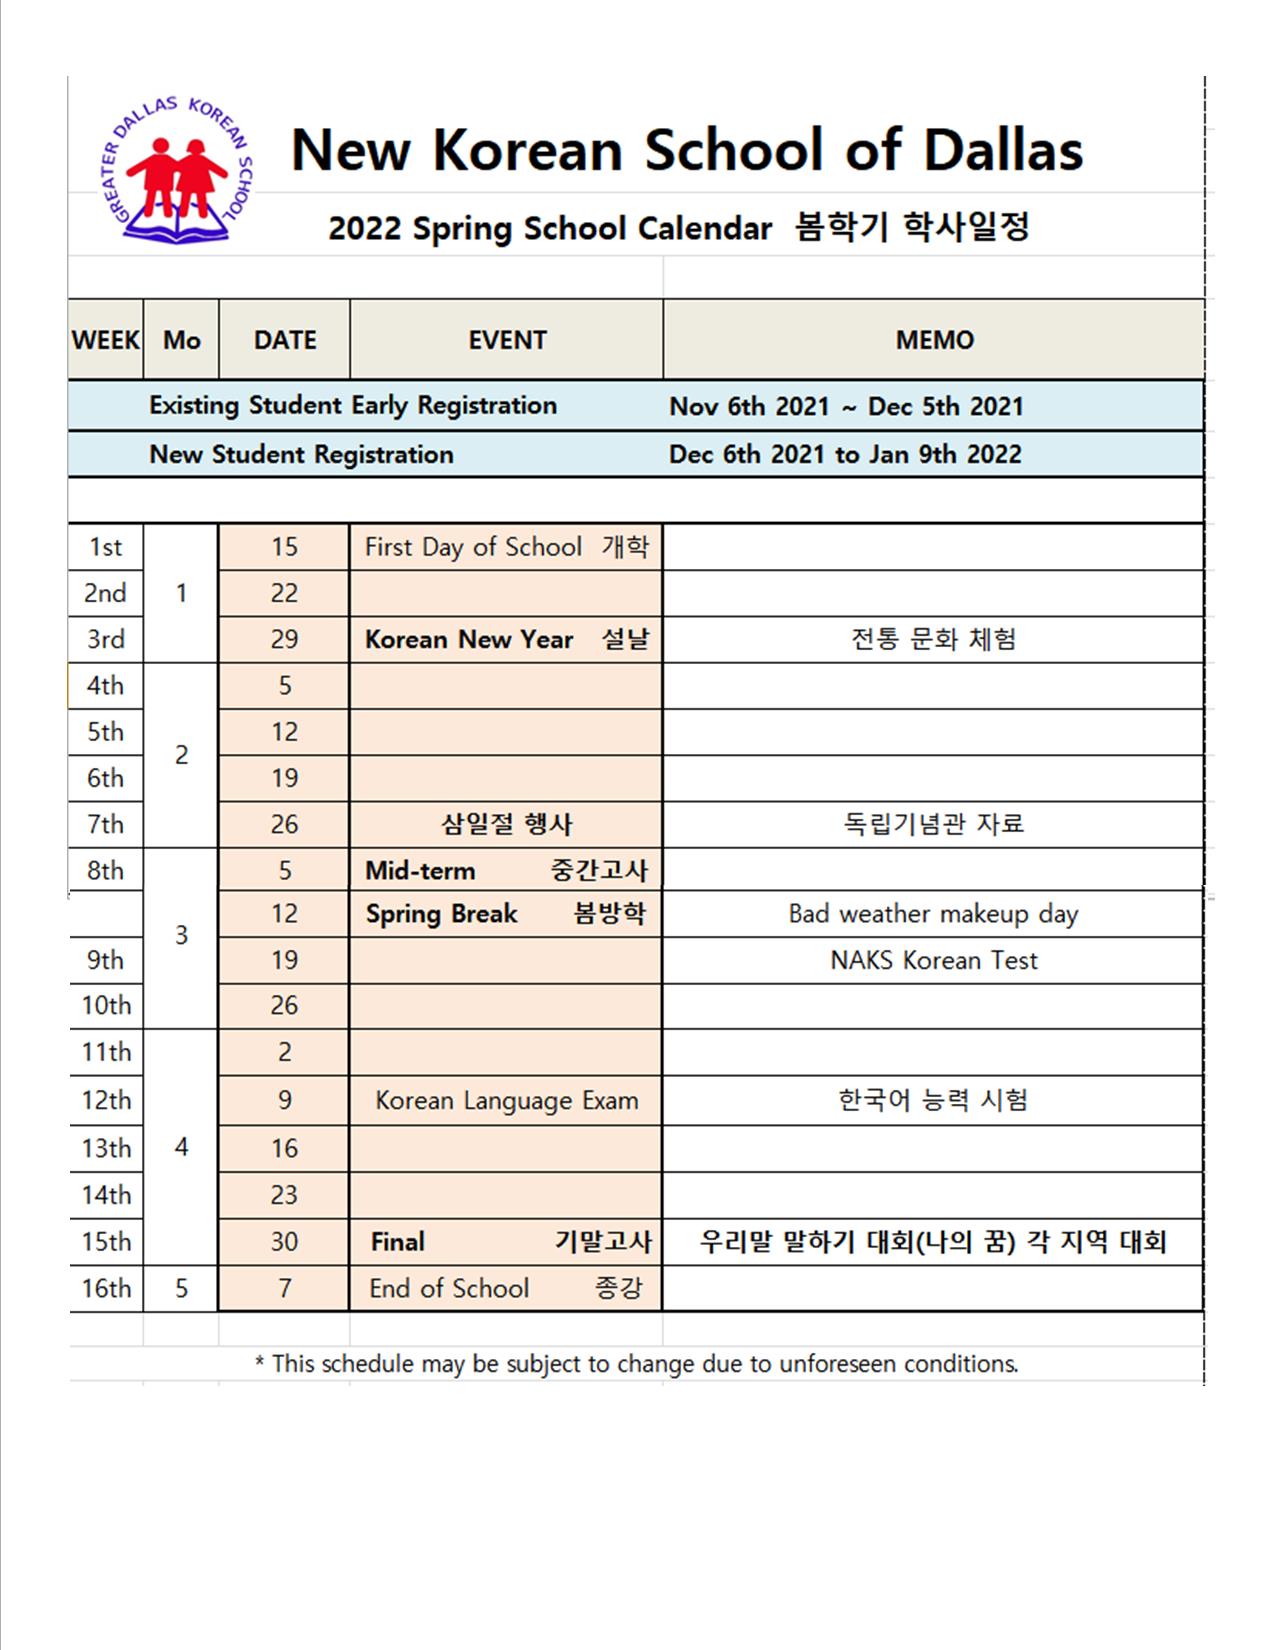 2021 Spring 2021 Fall School Calendar New Korean School of Dallas